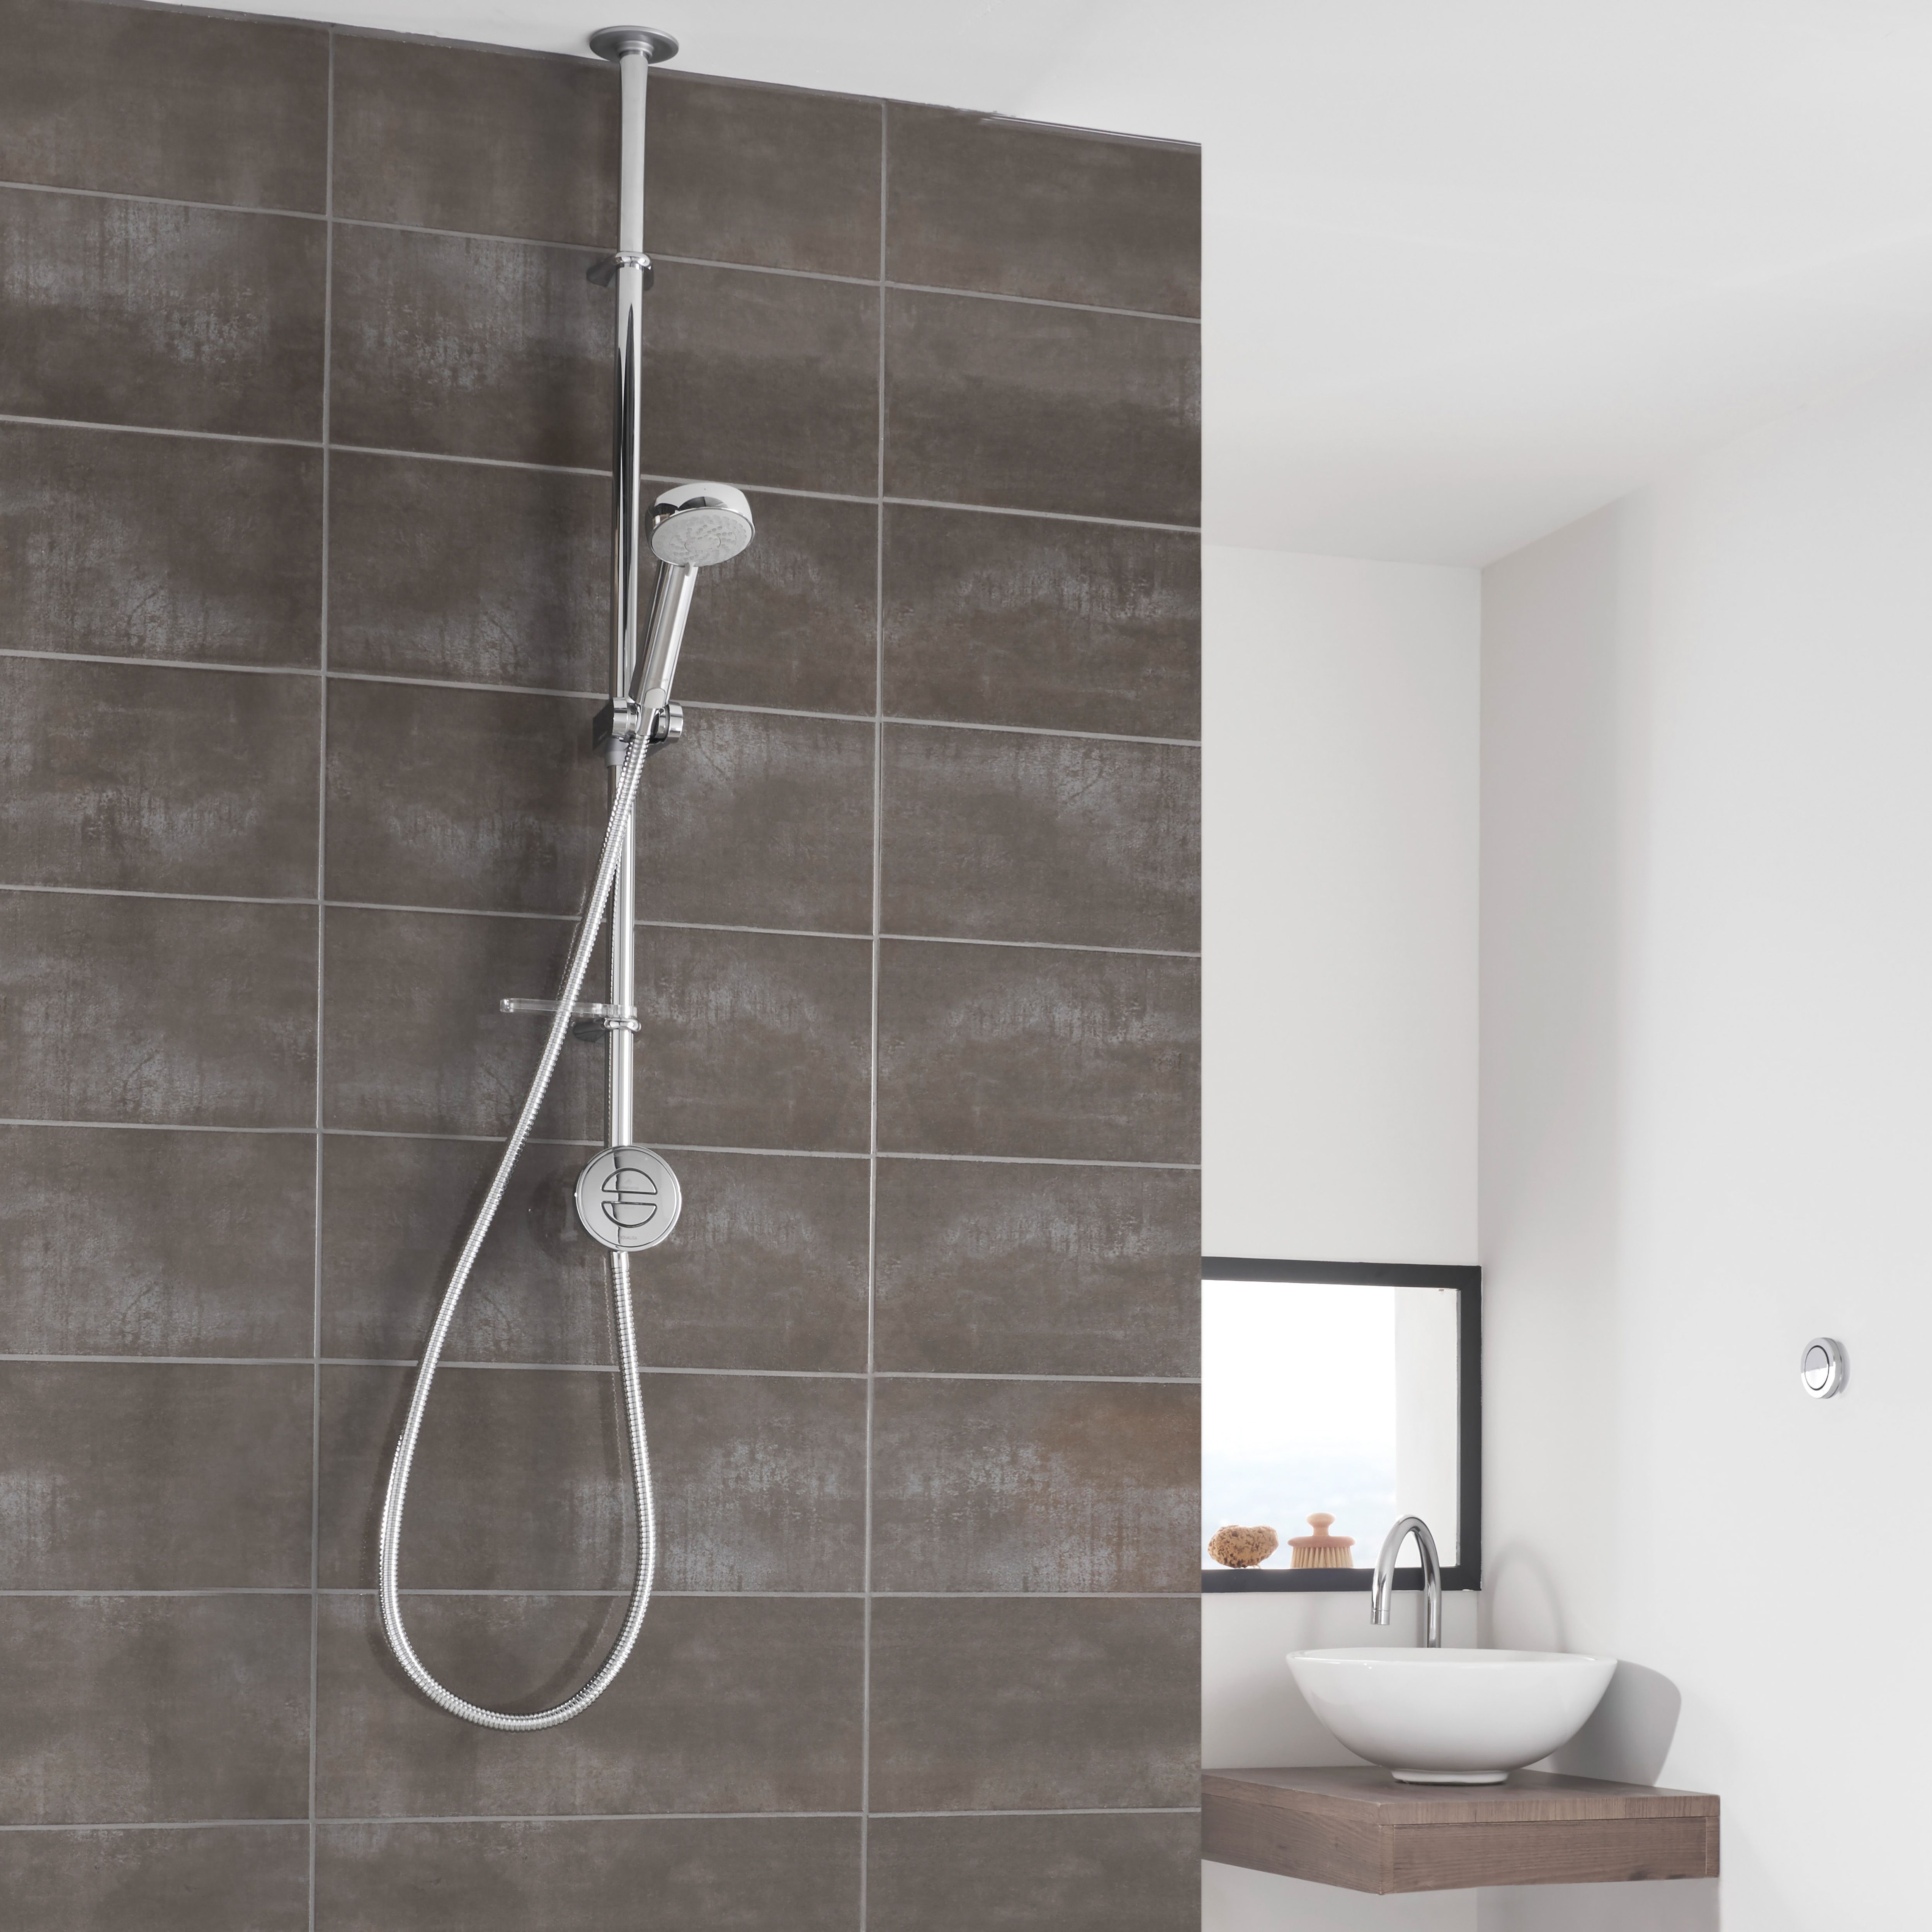 Aqualisa Smart Link Exposed valve HP/Combi Ceiling fed Smart Digital Shower with Adjustable shower head